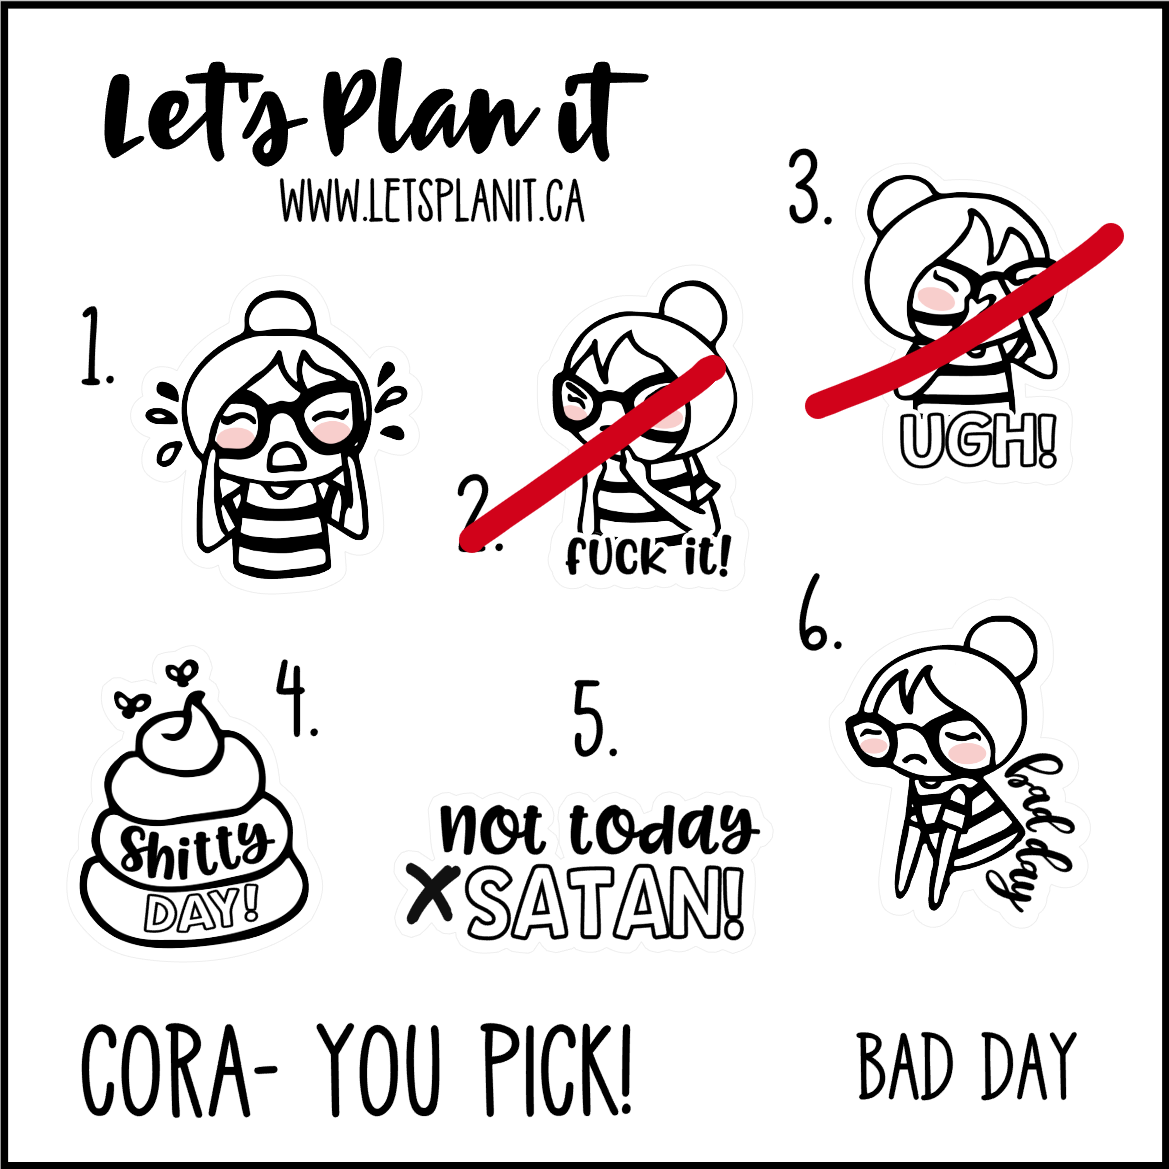 Cora-u-pick- Bad Day